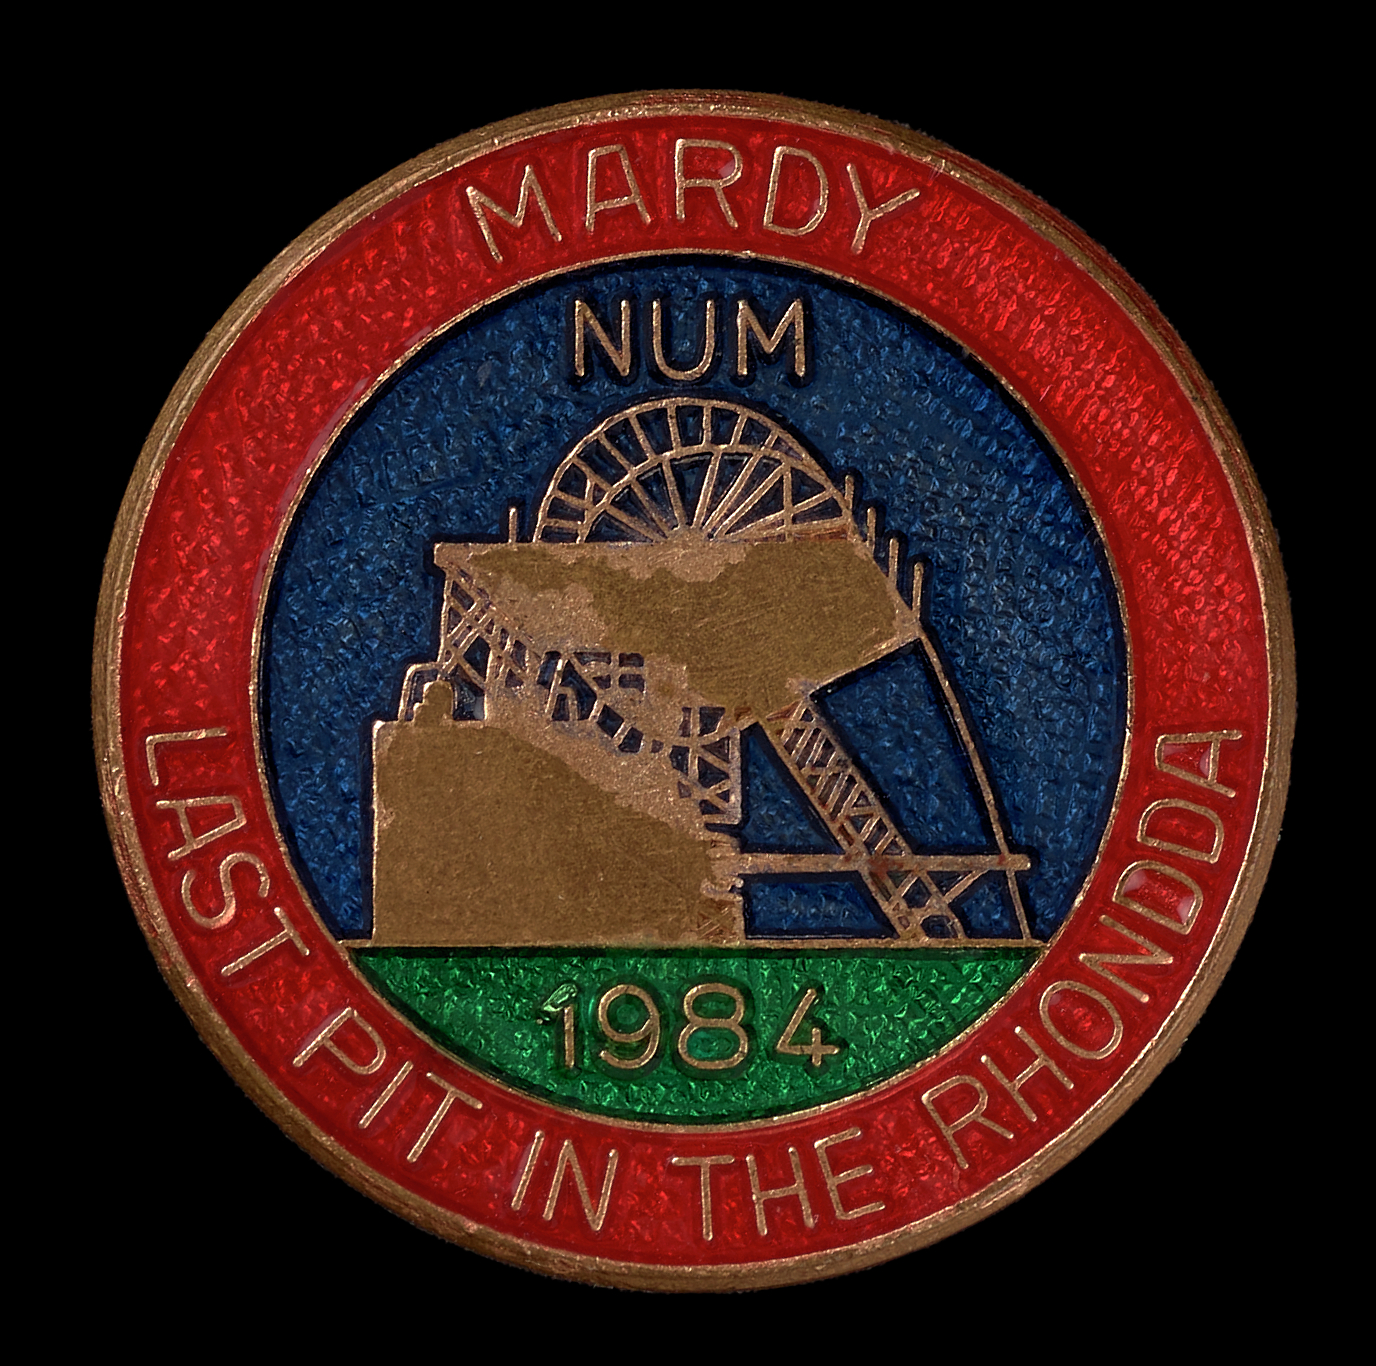 Mardy Last Pit in the Rhondda (badge)